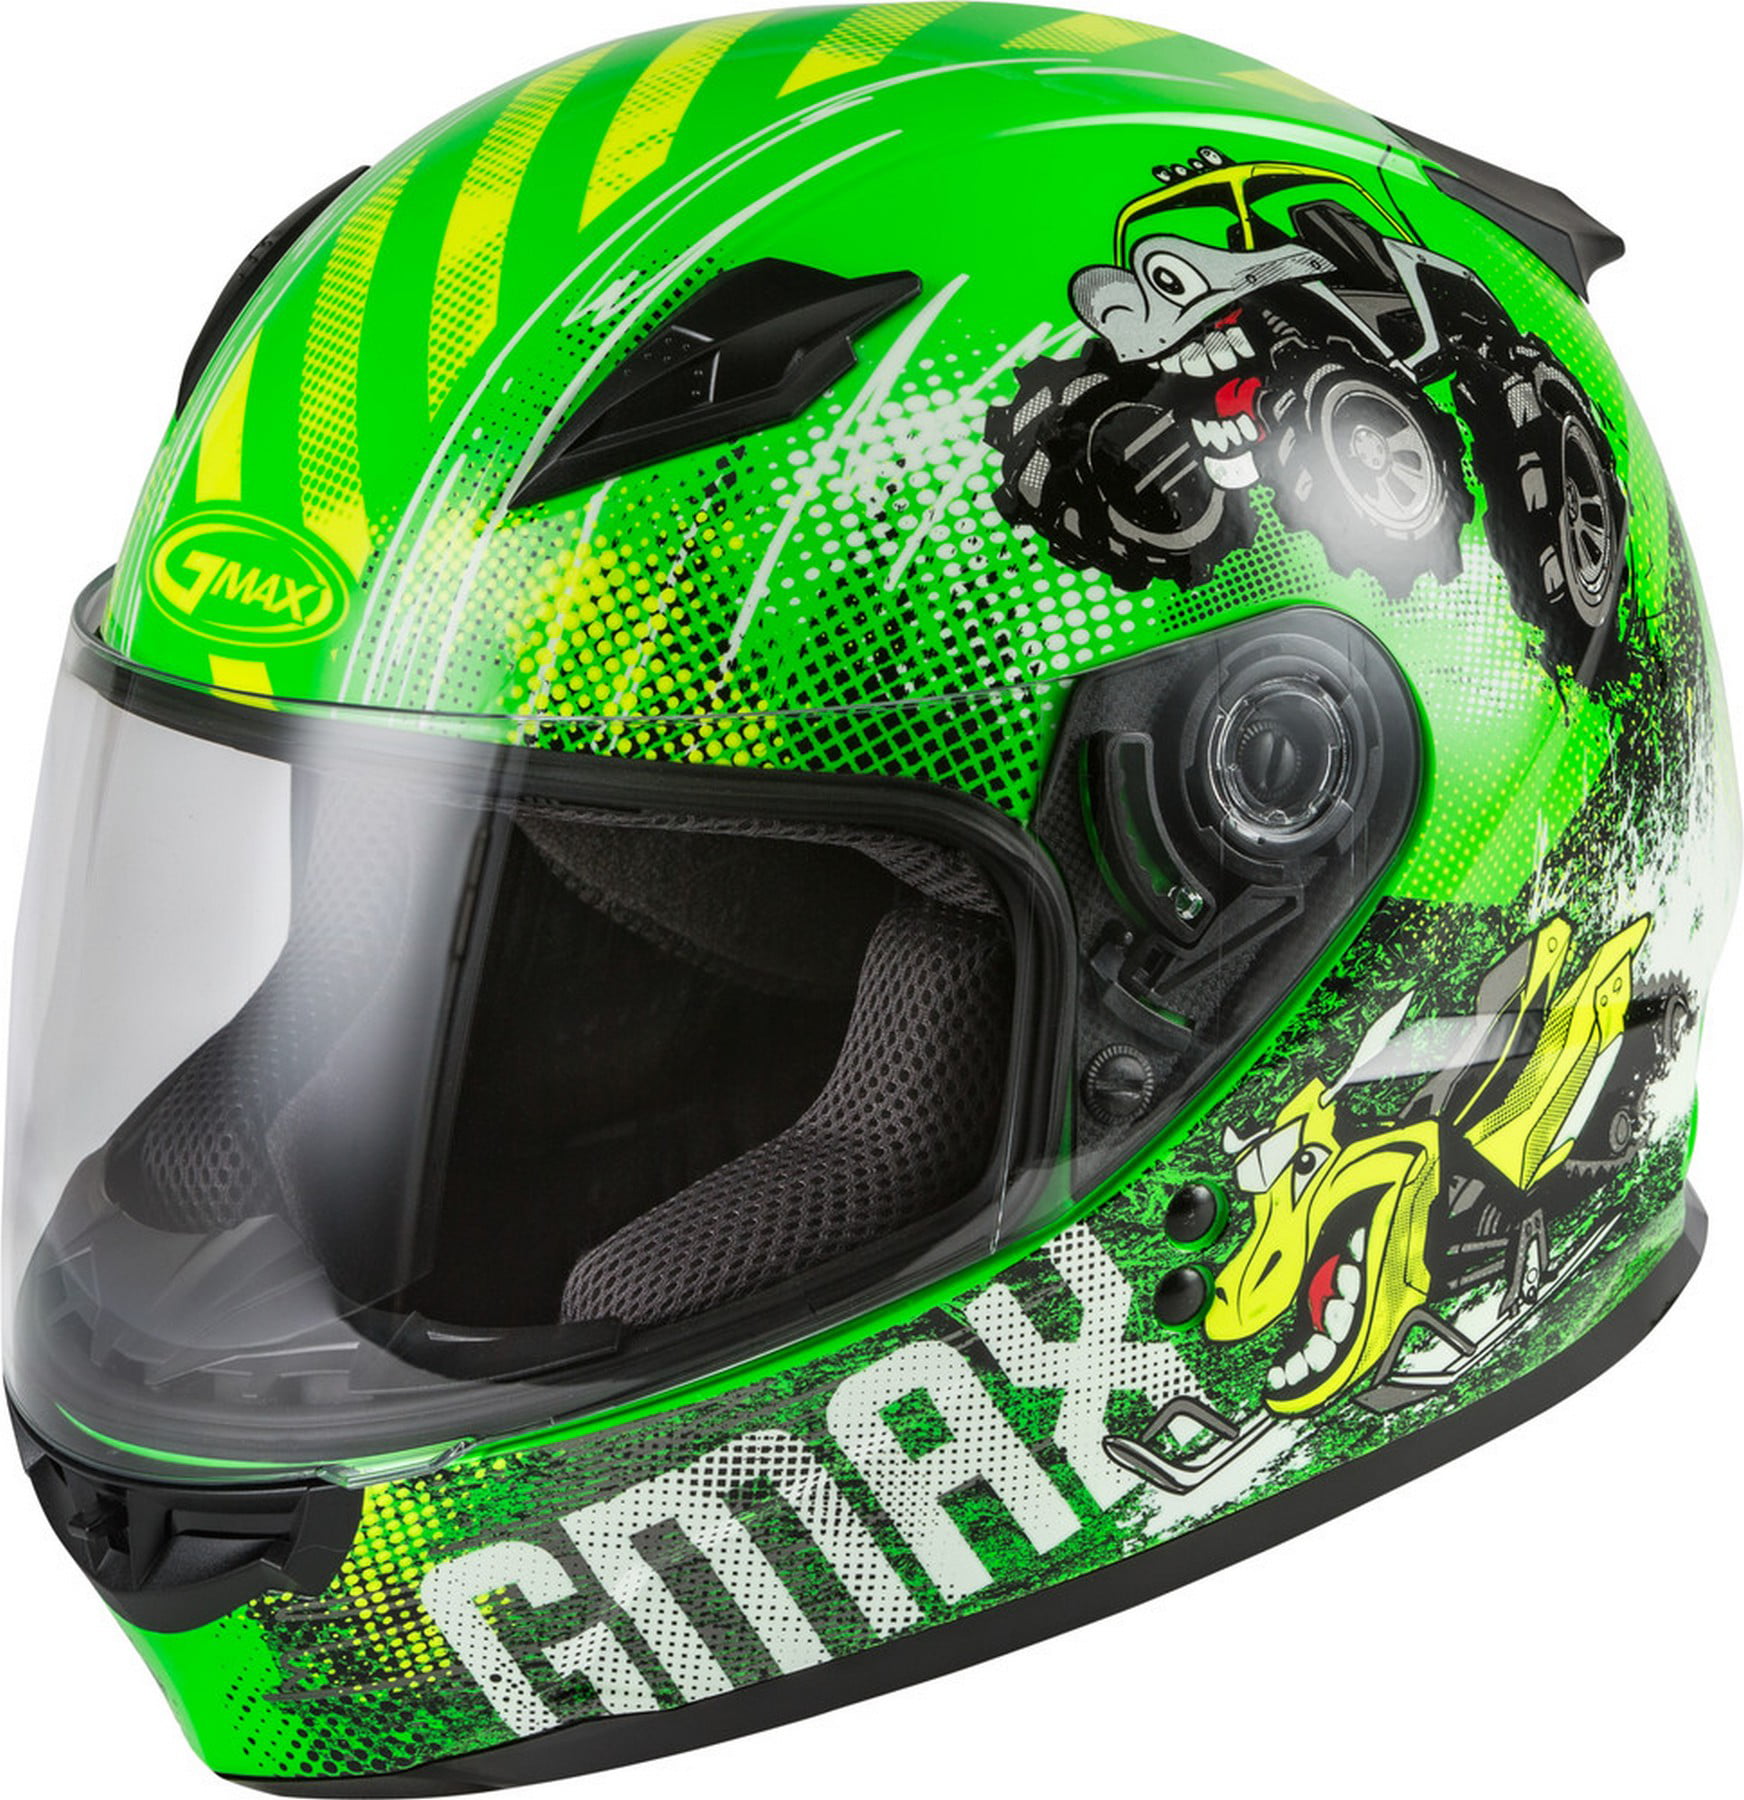 GMAX GM-49Y Beasts Youth Motorcycle Helmet Hi Vis Neon Green SM - Walmart.com - Walmart.com